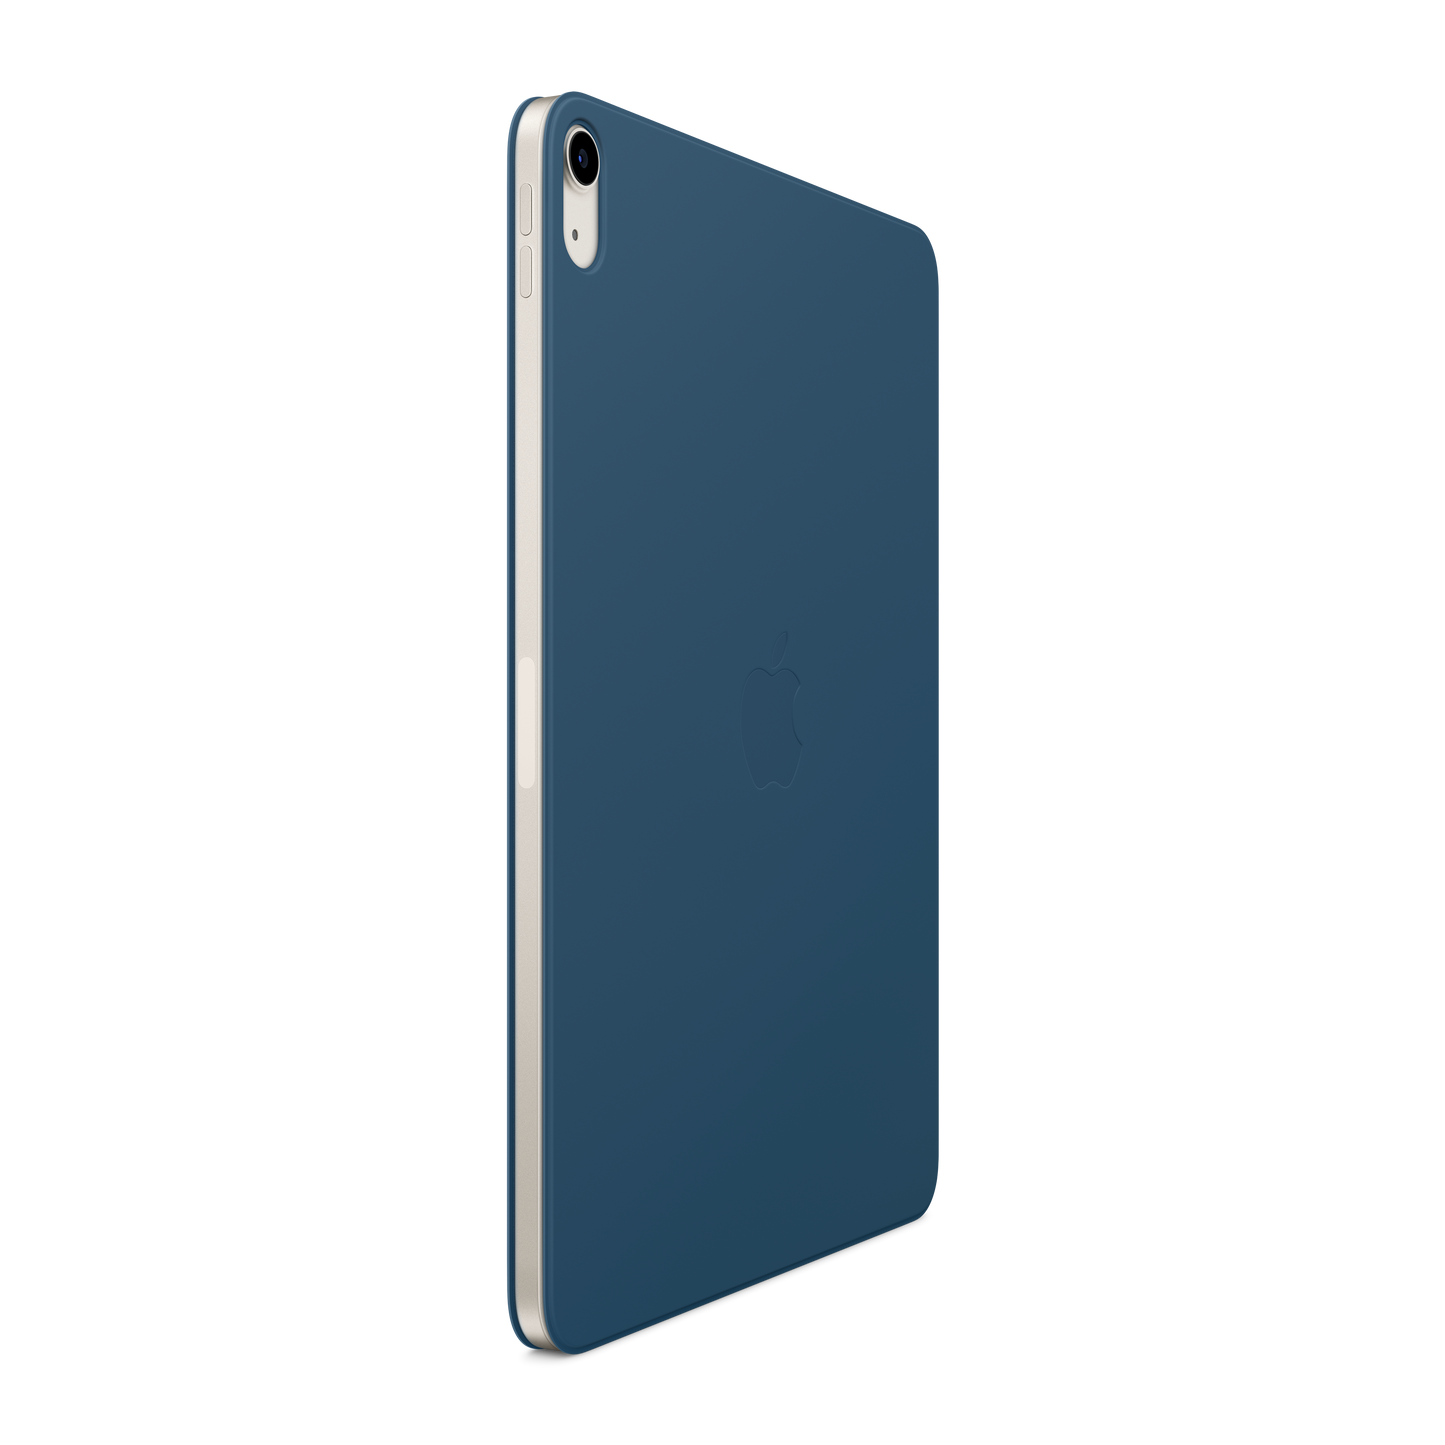 Smart Folio for iPad Air (5th generation) - Marine Blue